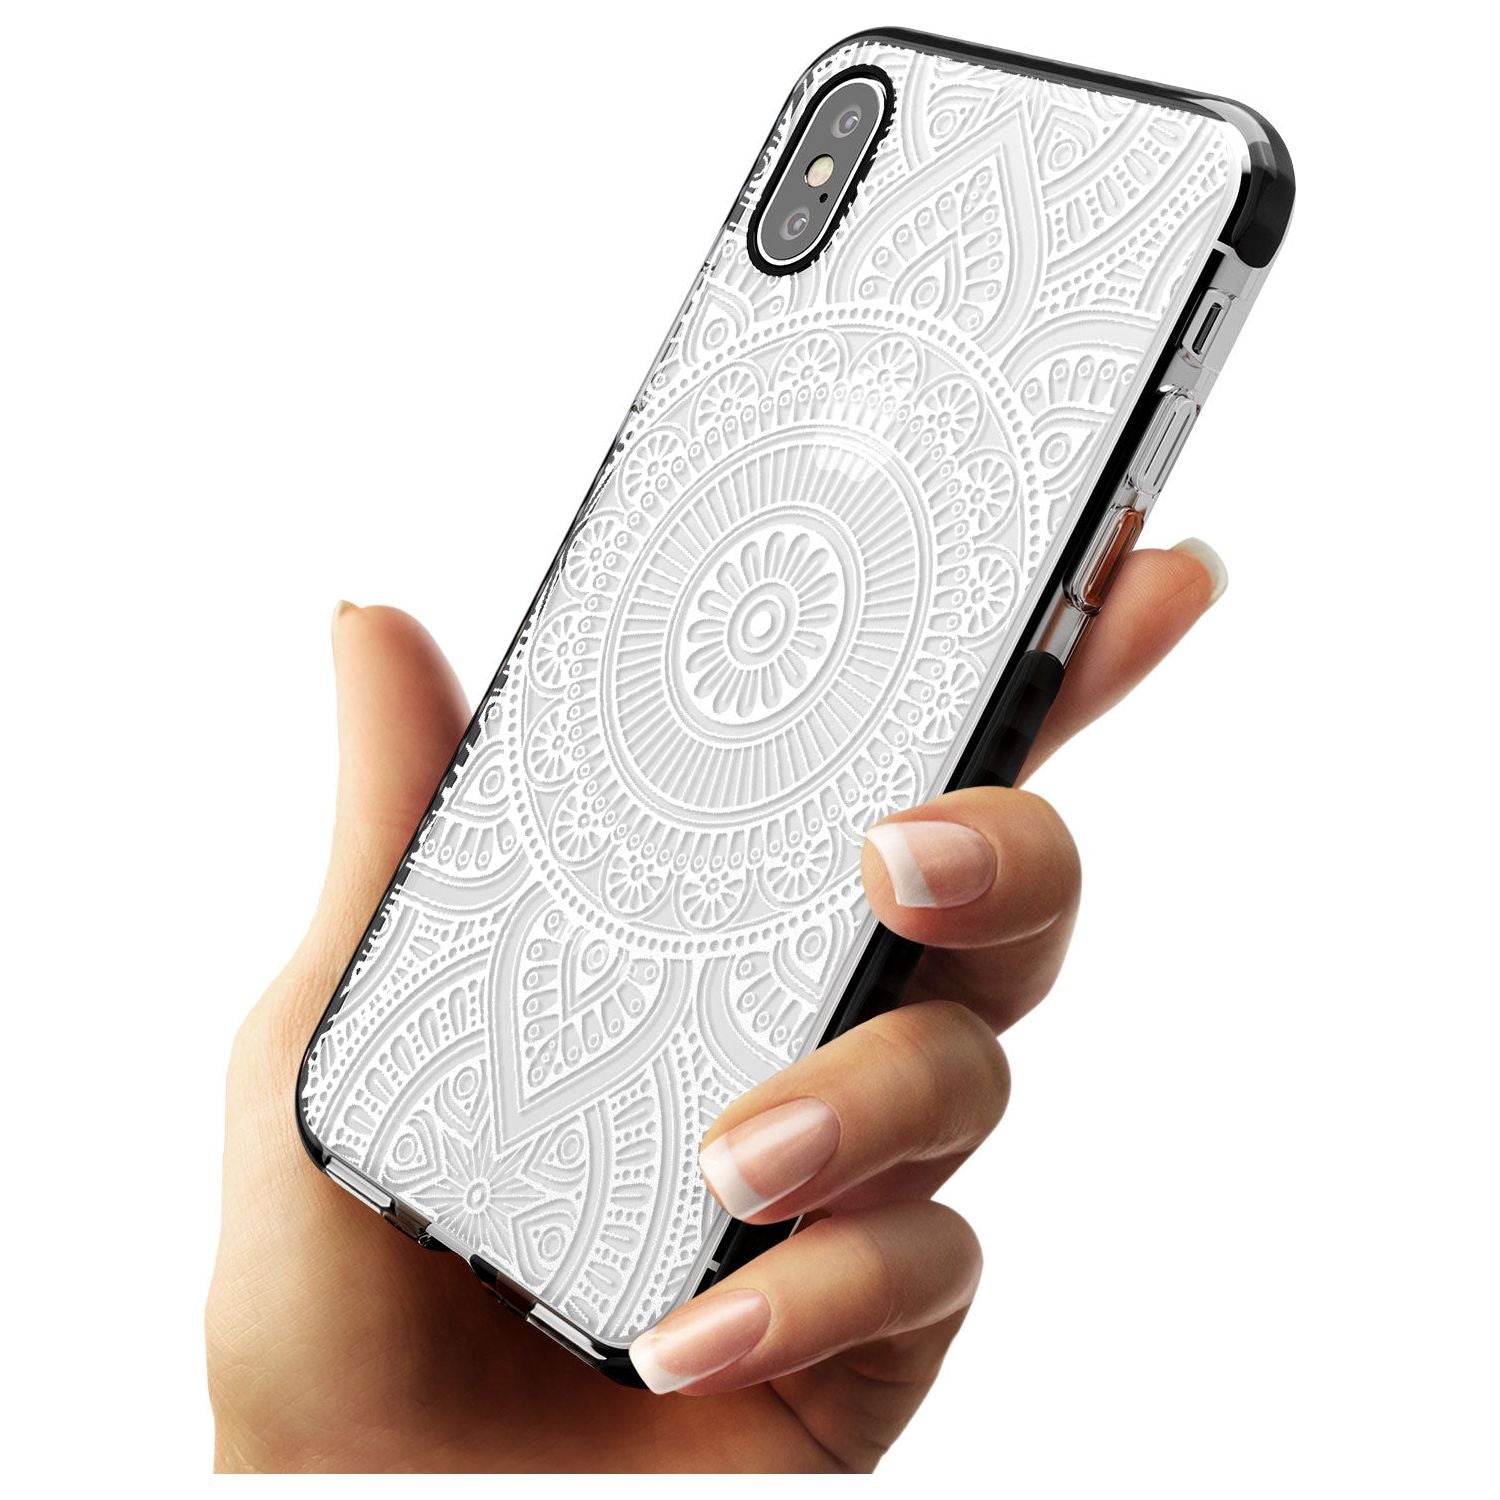 White Henna Flower Wheel Black Impact Phone Case for iPhone X XS Max XR